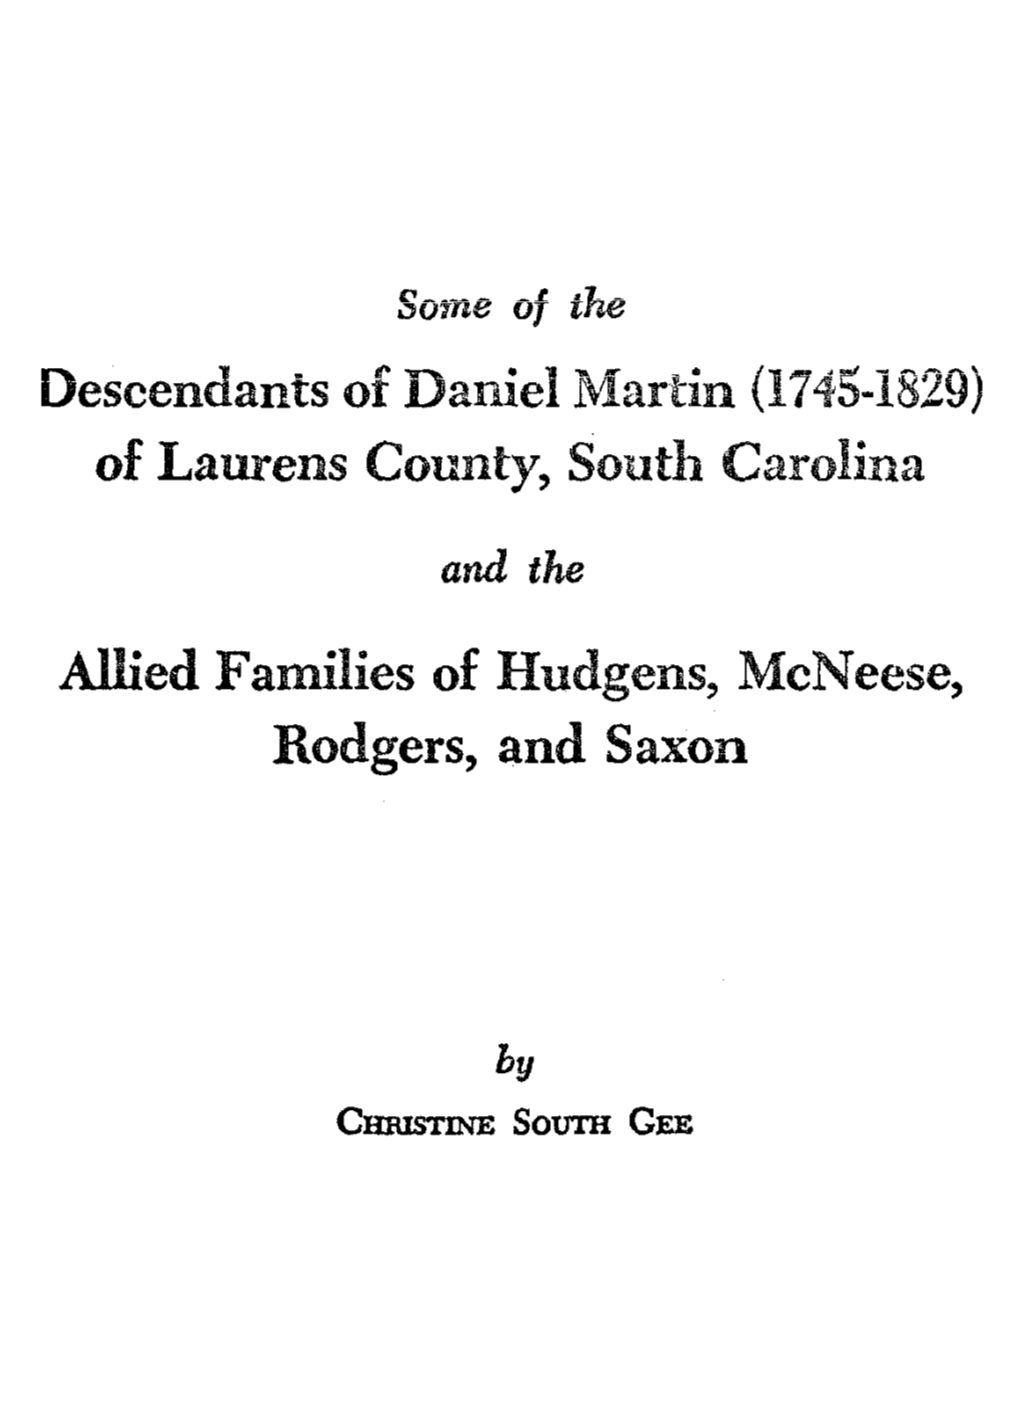 Descendants of Daniel Martin (1745-1829) of Laurens County, South Carolina